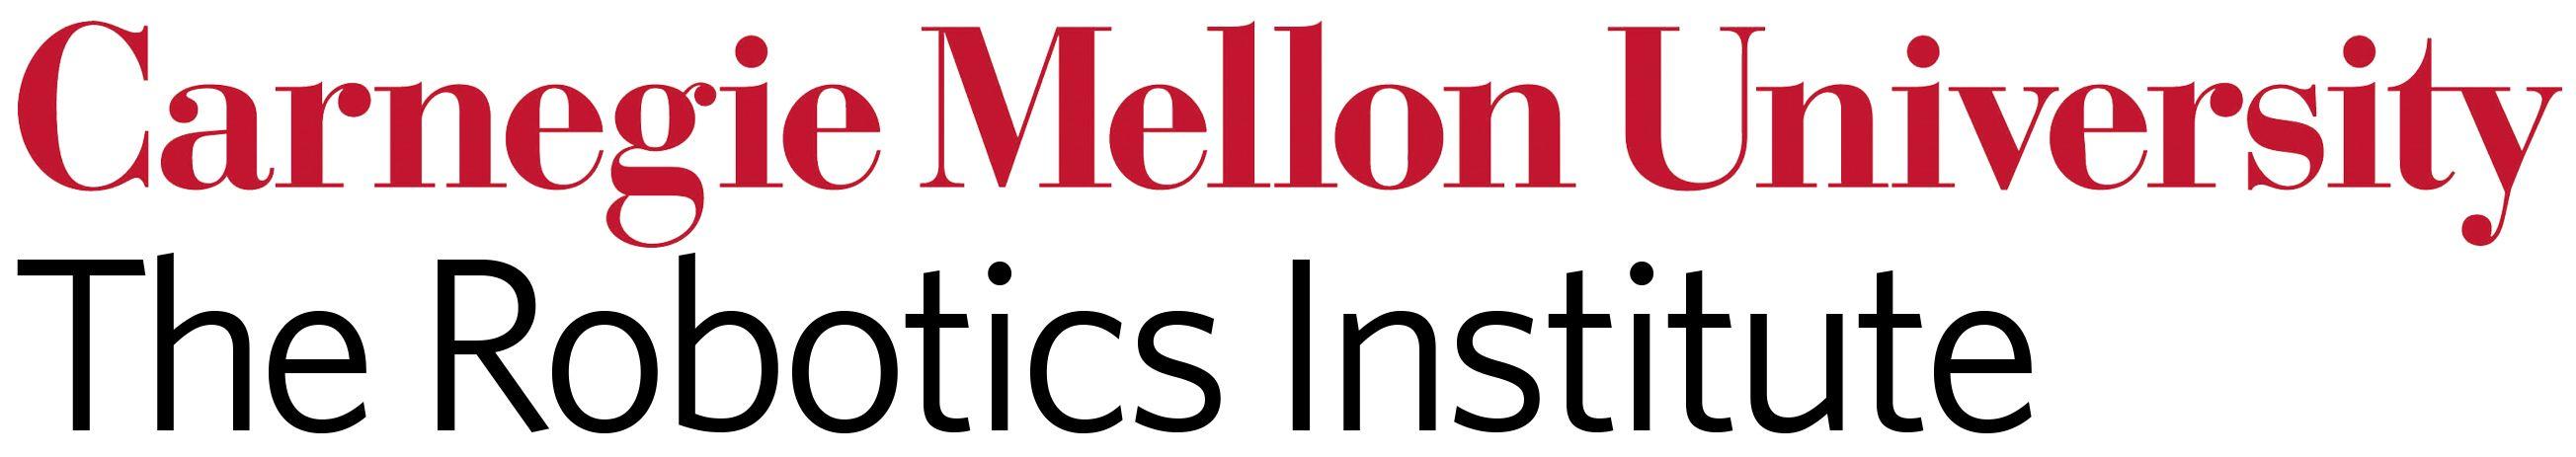 Carnegie Mellon University Logo - RI Logos - The Robotics Institute Carnegie Mellon University